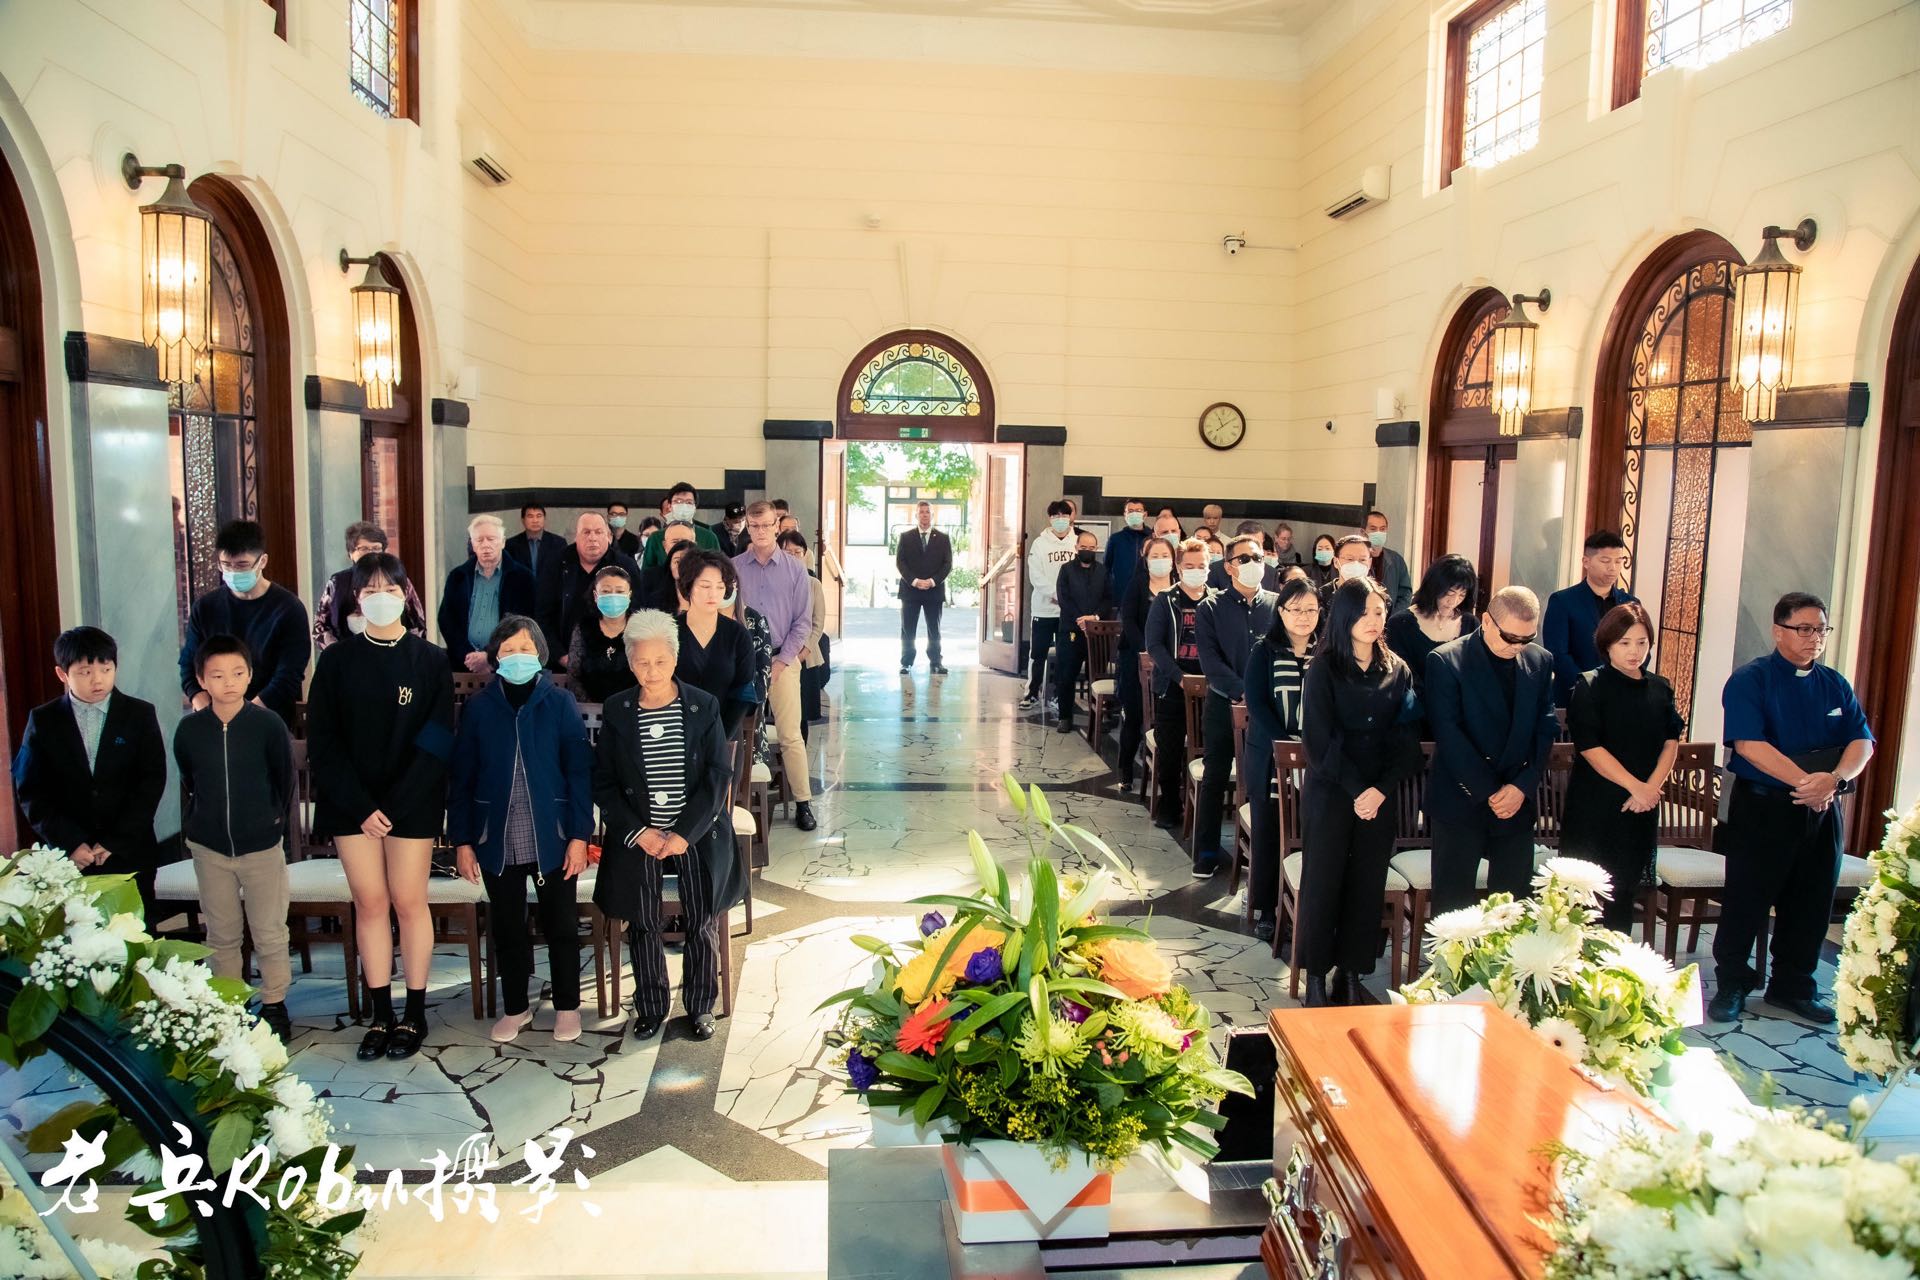 Sunnybank Funeral celebrants